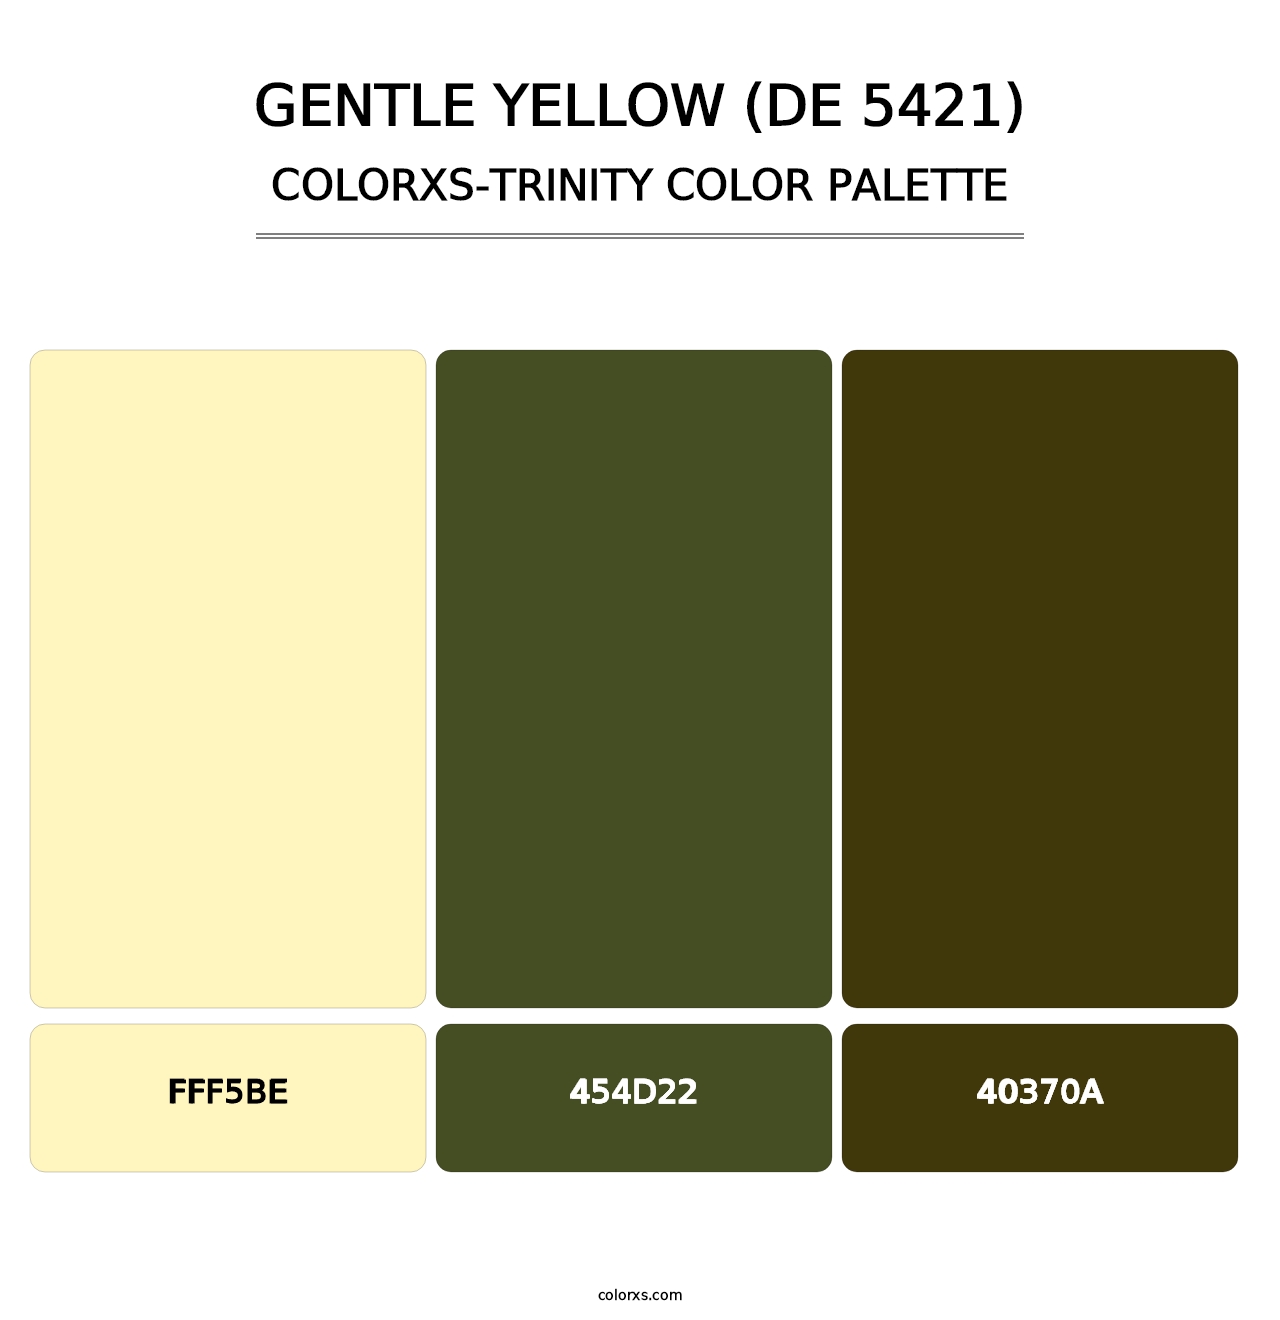 Gentle Yellow (DE 5421) - Colorxs Trinity Palette